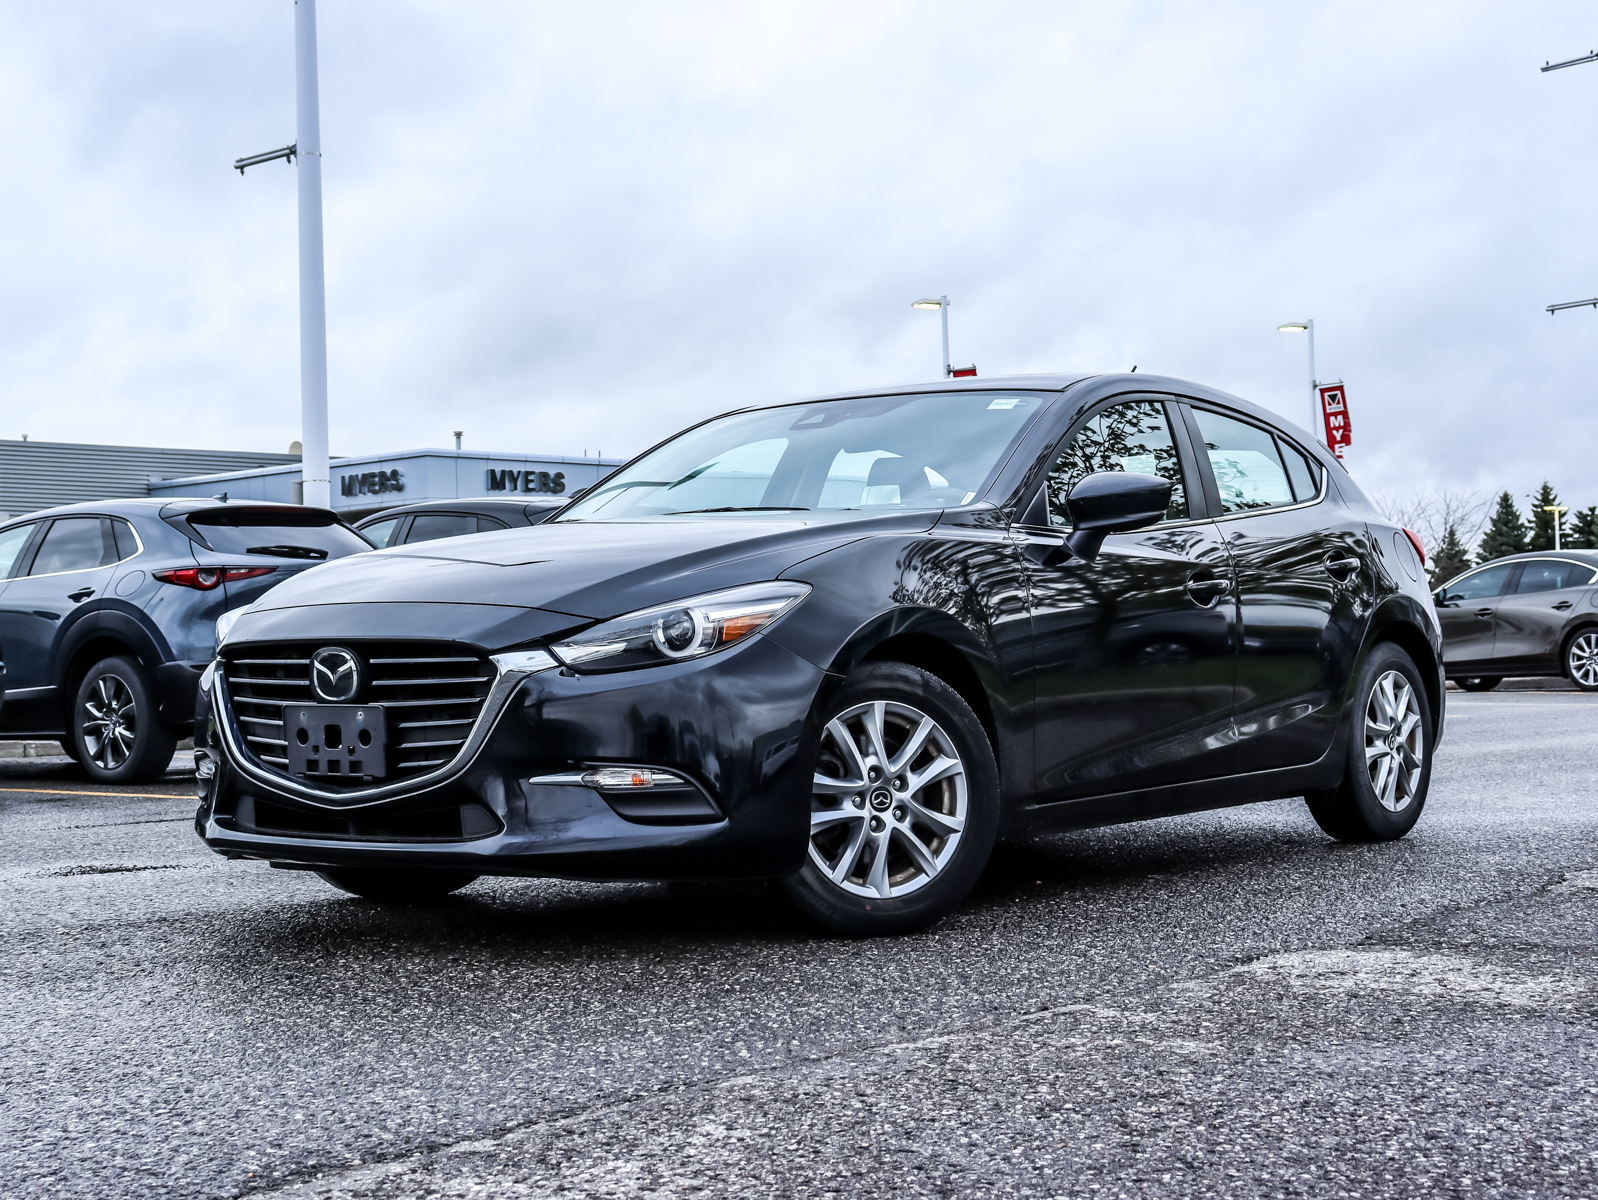 2018 Mazda Mazda3 Sport ONE OWNER | LOCAL TRADE | HEATED SEATS | POWER MOO